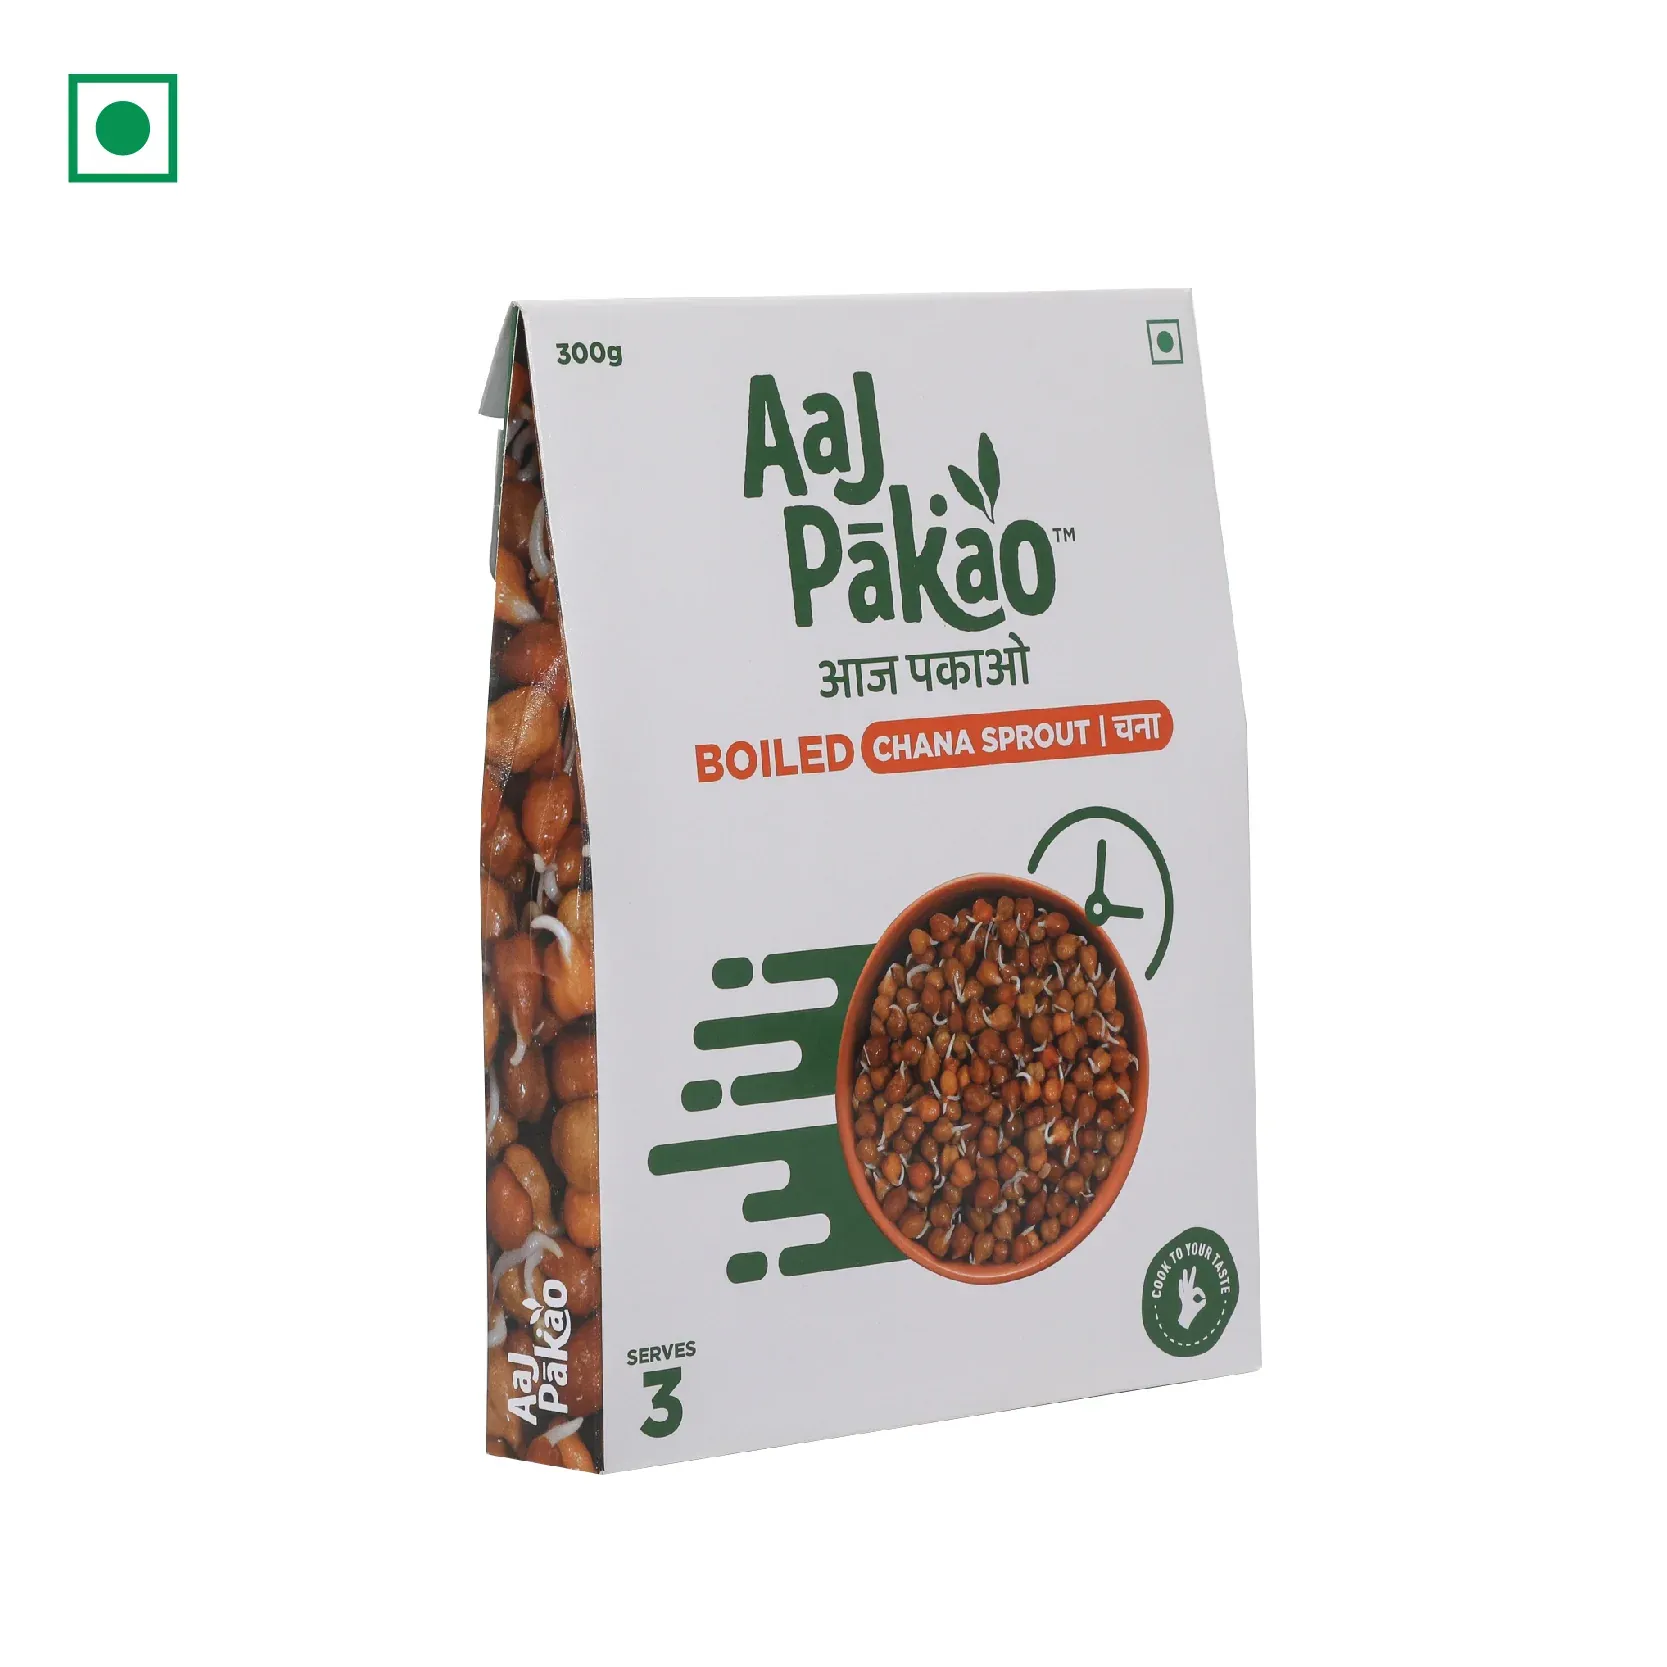 Aaj Pakao Boiled Chana Sprout Image